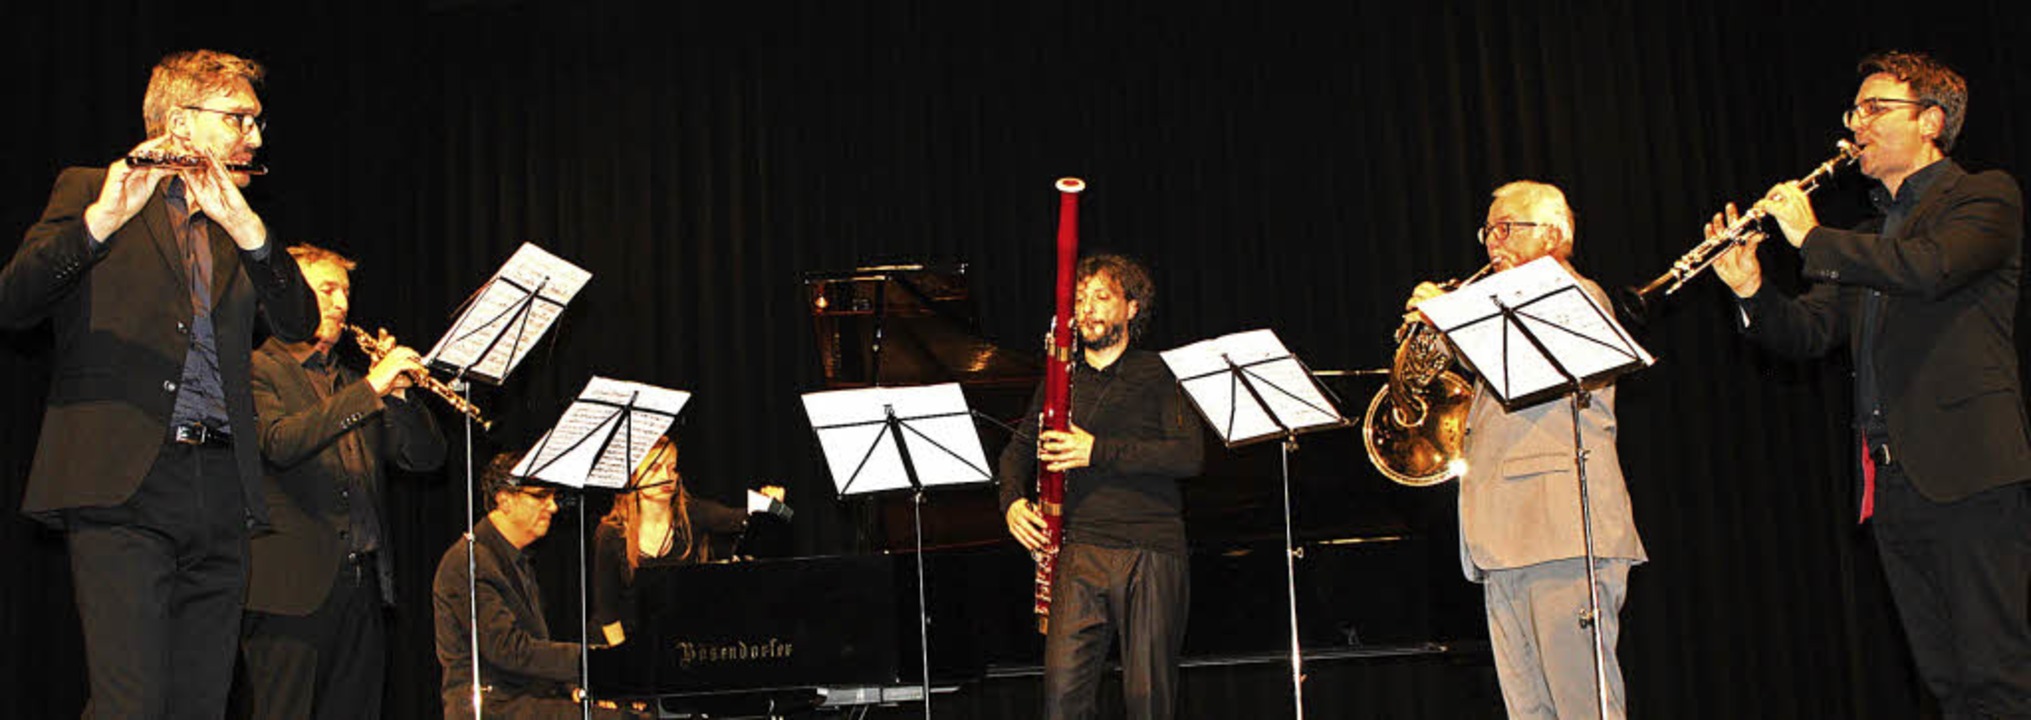 Mario Caroli, Florian Hasel, Éric Le S...ld  spielten das Sextett von Poulenc.   | Foto: Hildegard Karig